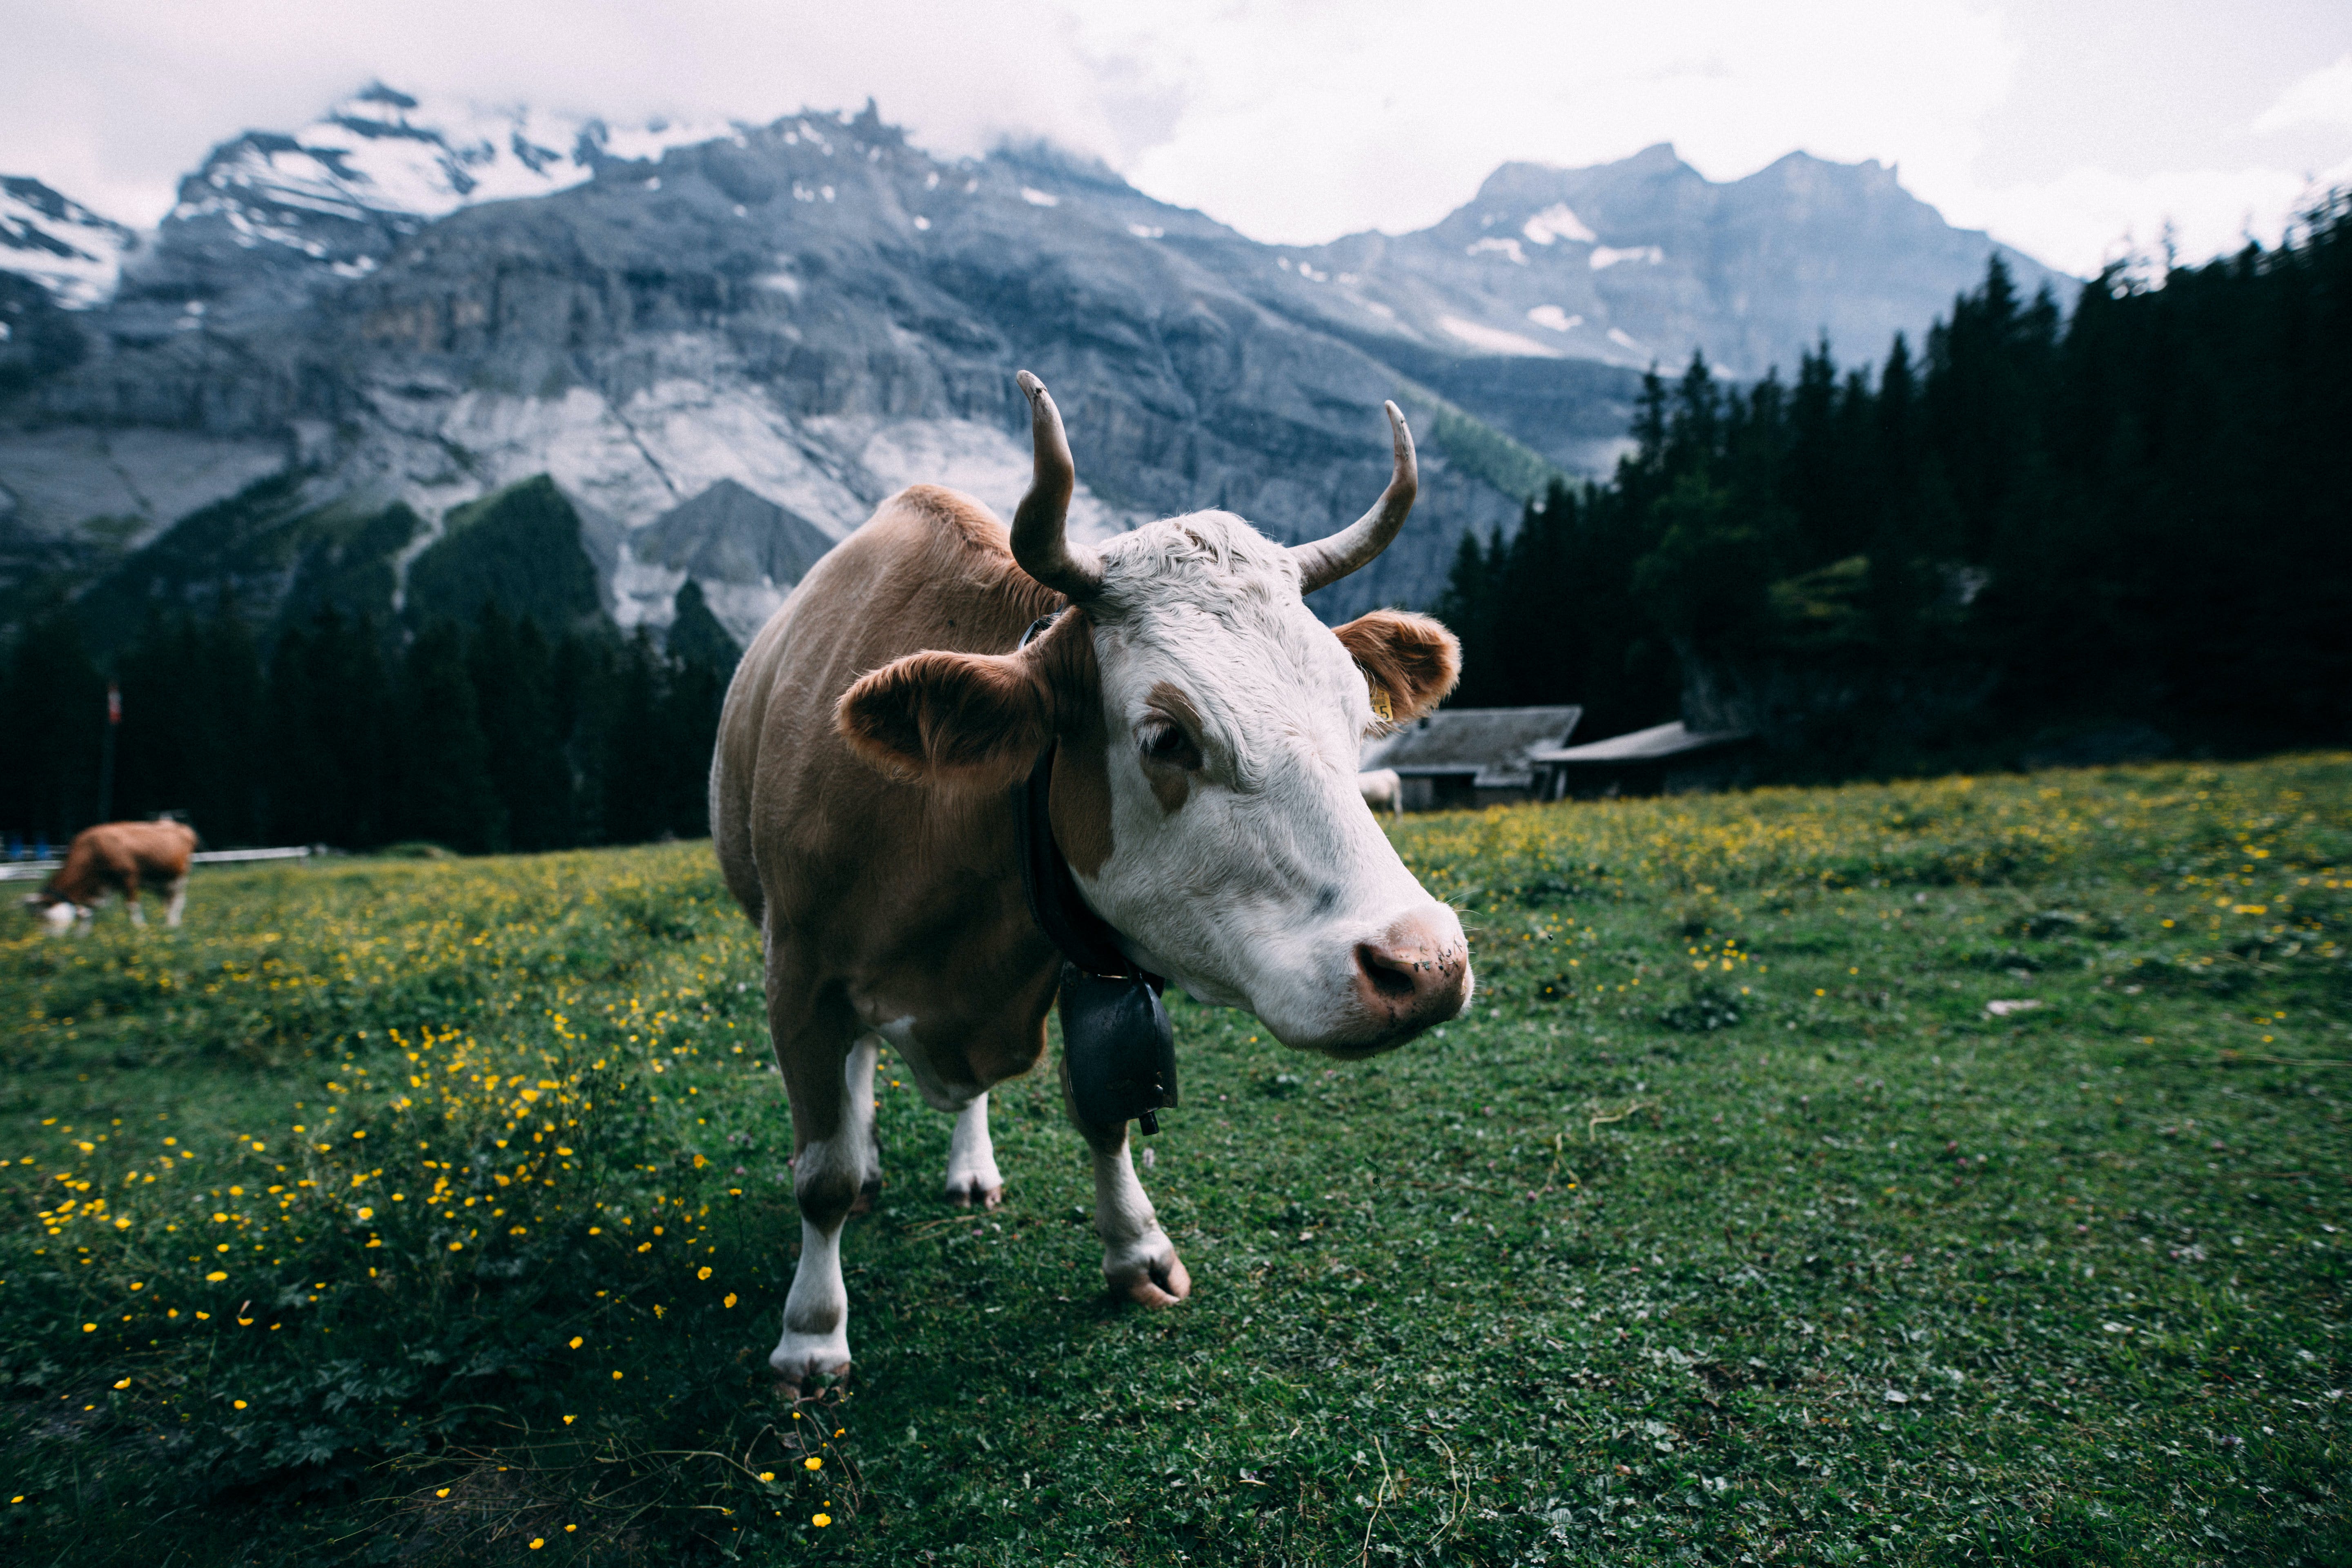 A cow wondering around. | Source: Pexels